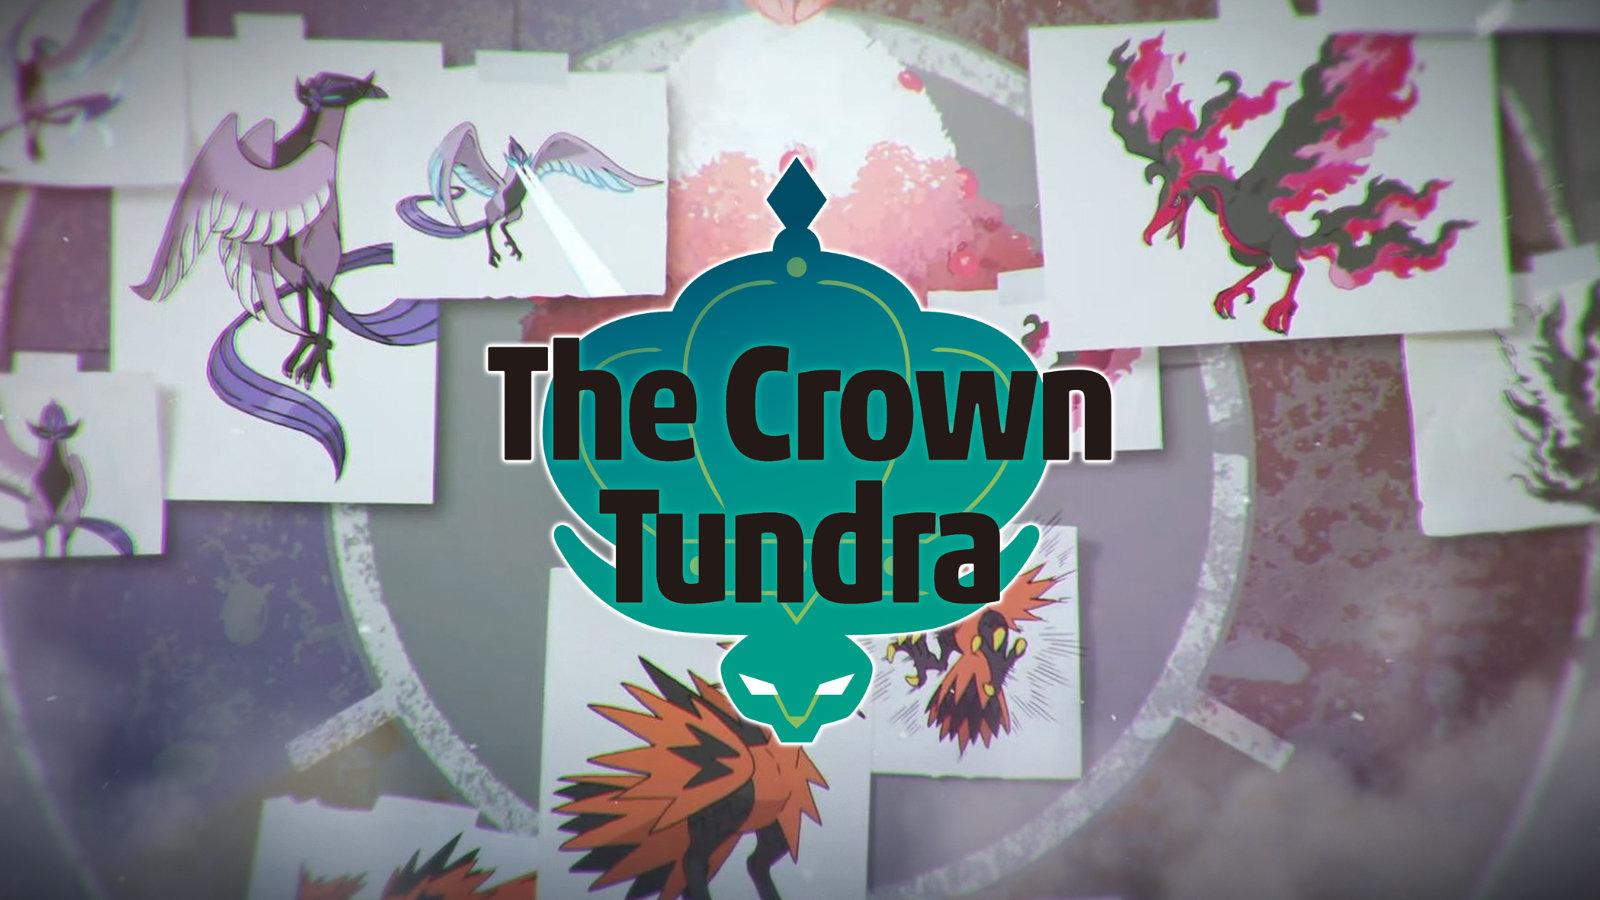 Galarian Articuno Zapdos Moltres Legendary Crown Tundra Pokemon Sword DLC